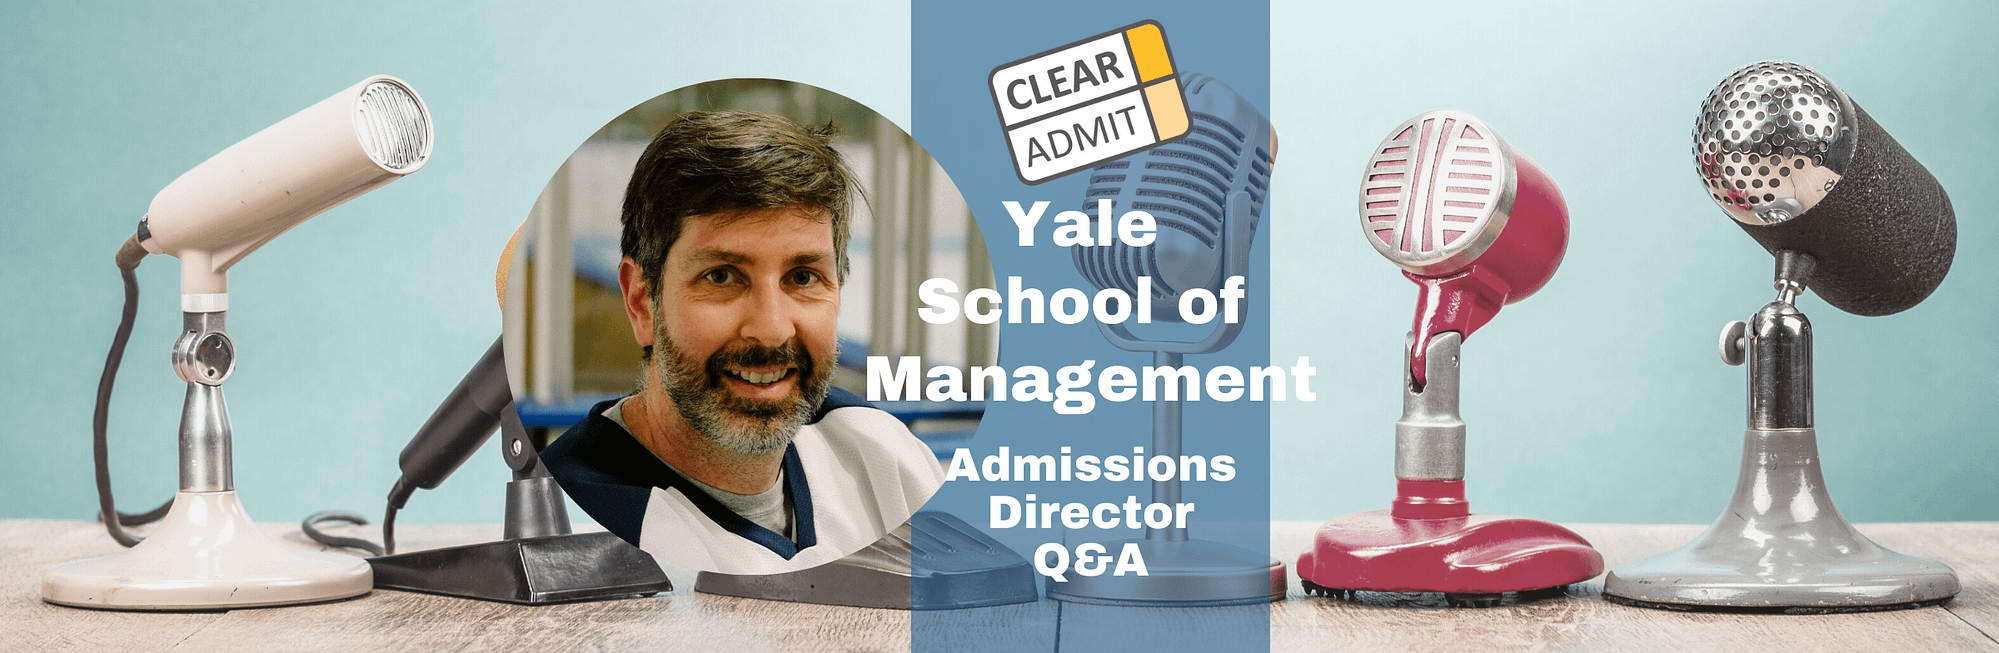 yale admissions director q&a